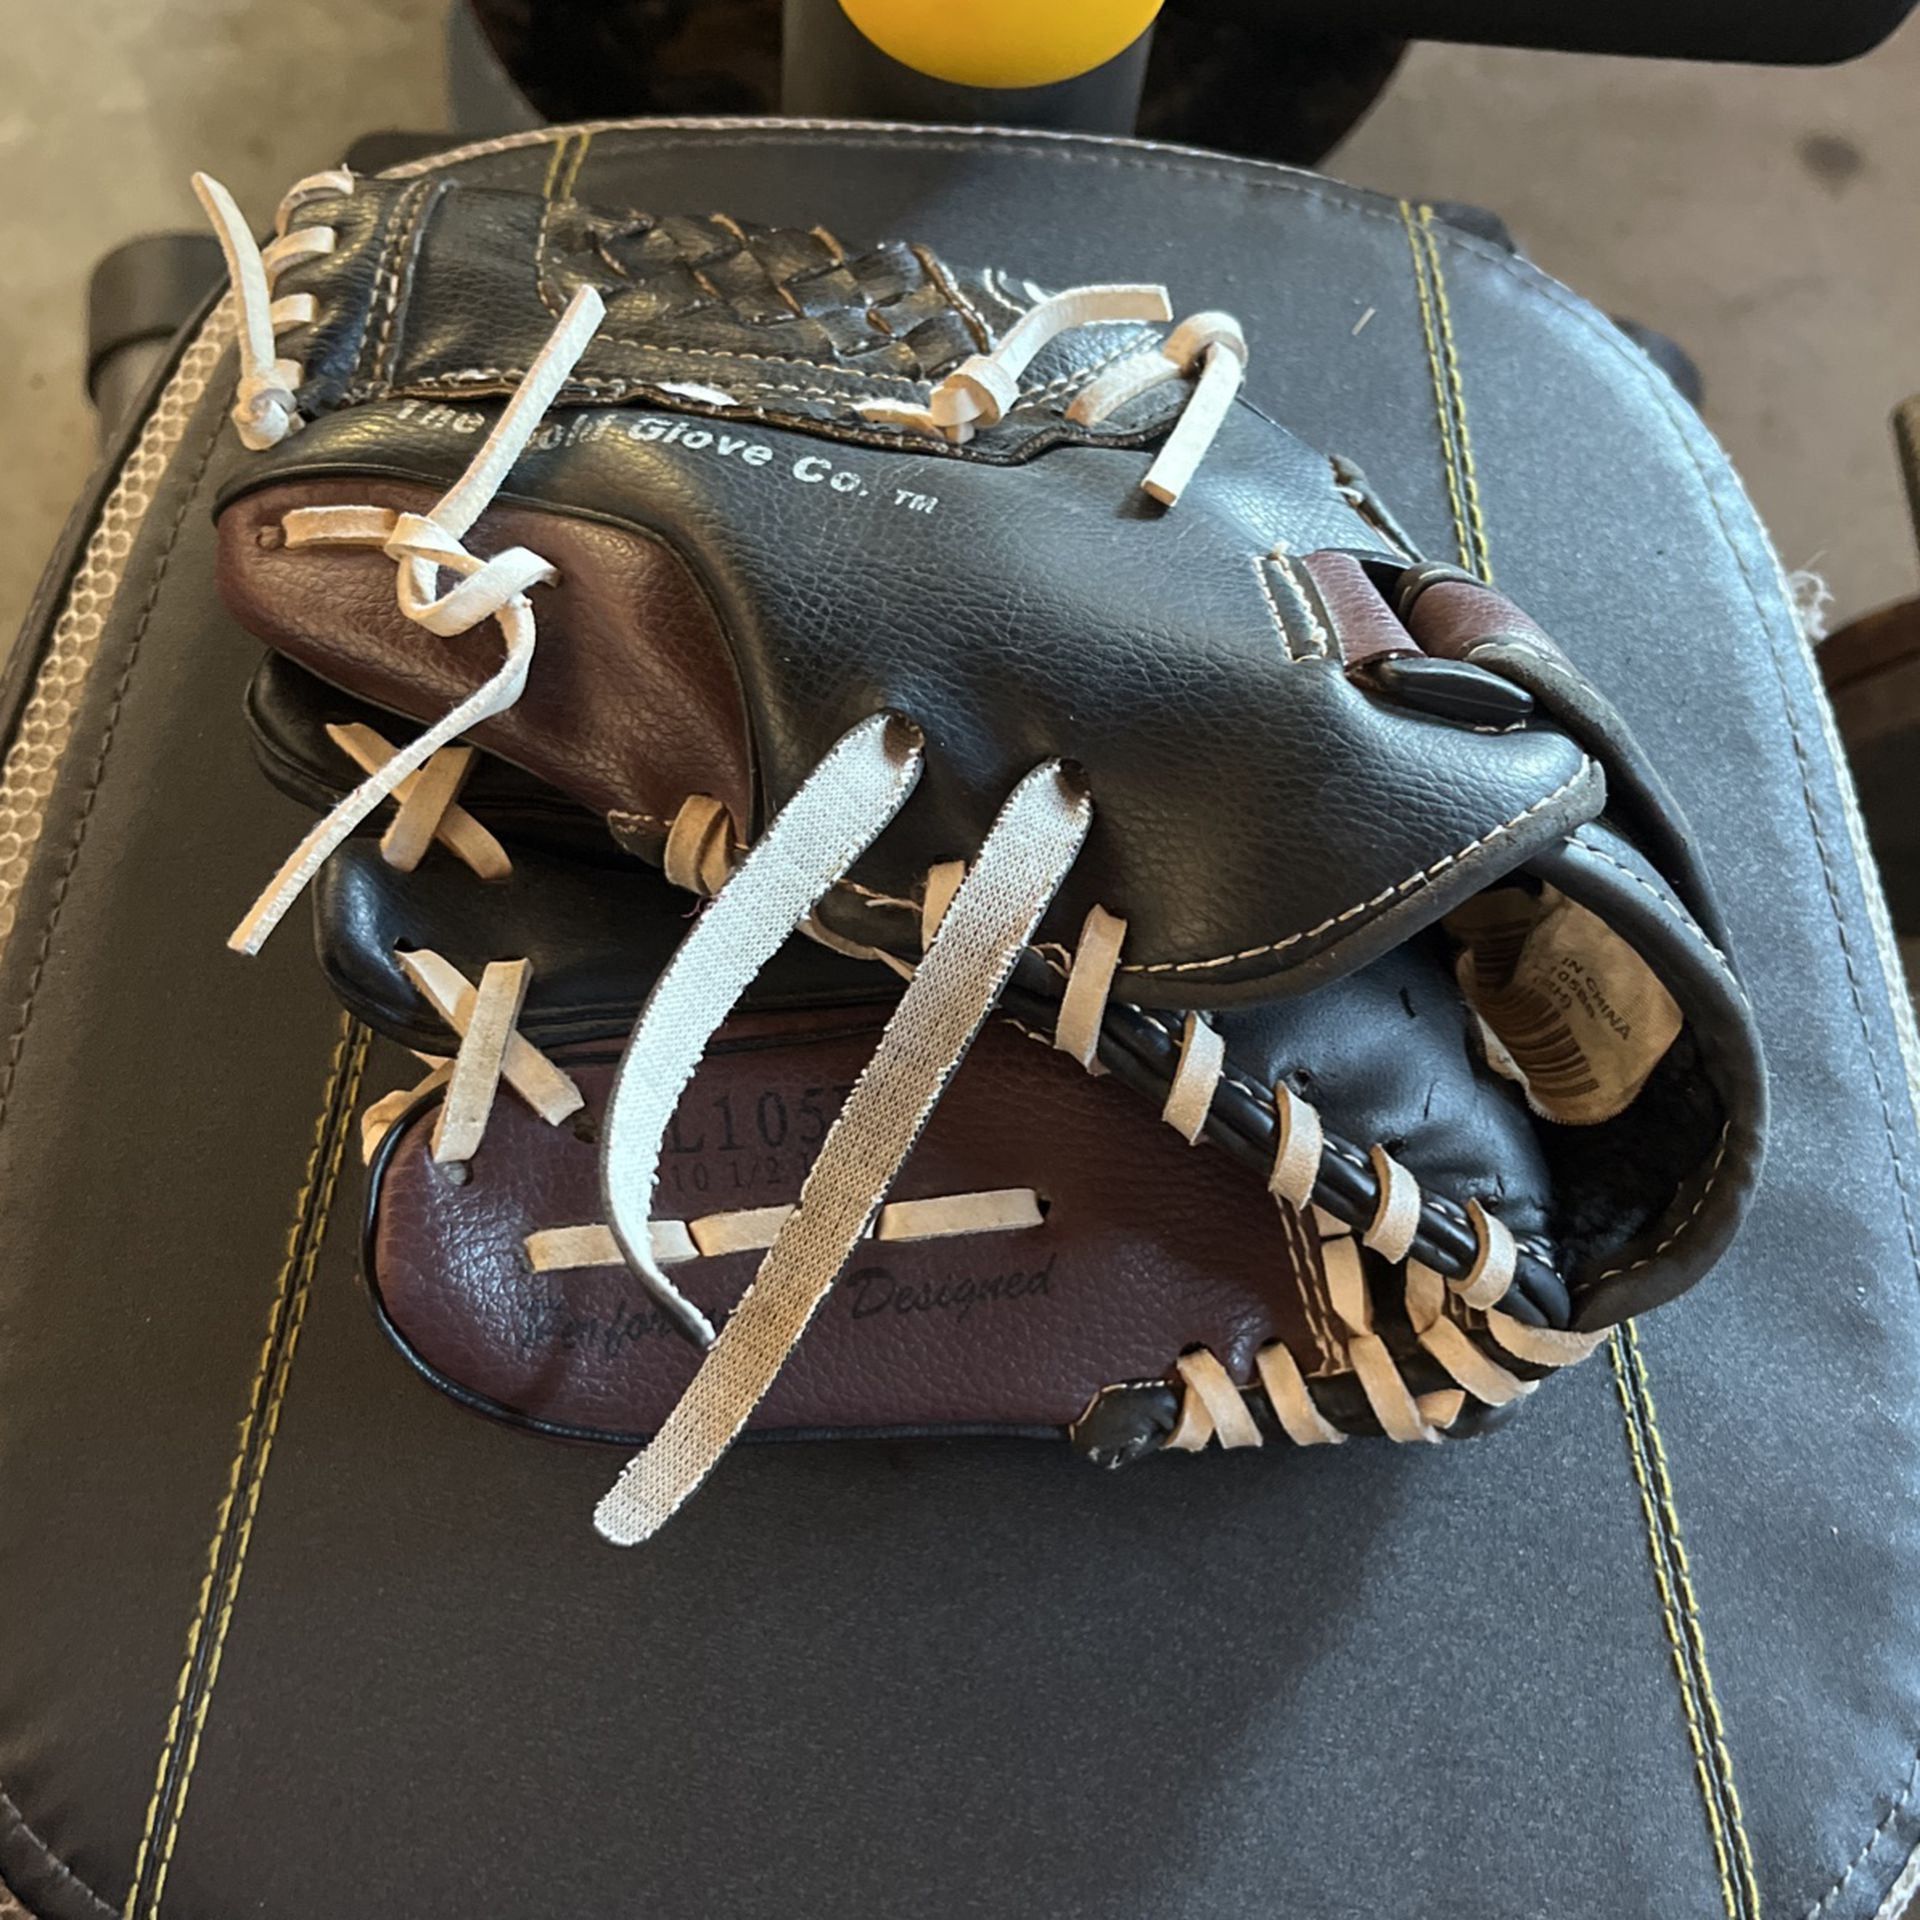 Rawlings “10 1/2” Kids Left Handed Baseball Glove Game 